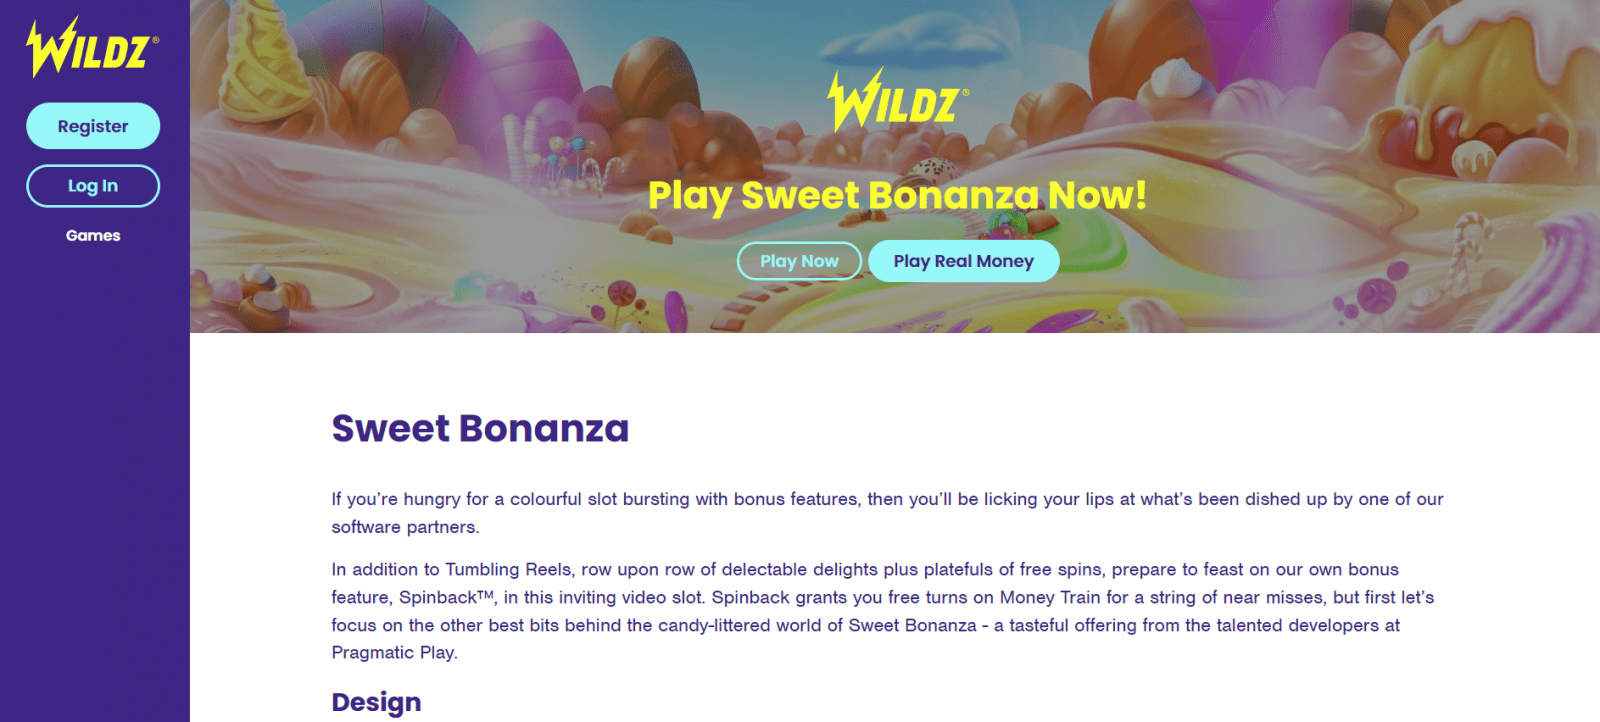 Hrát si s Wildz Sweet Bonanza